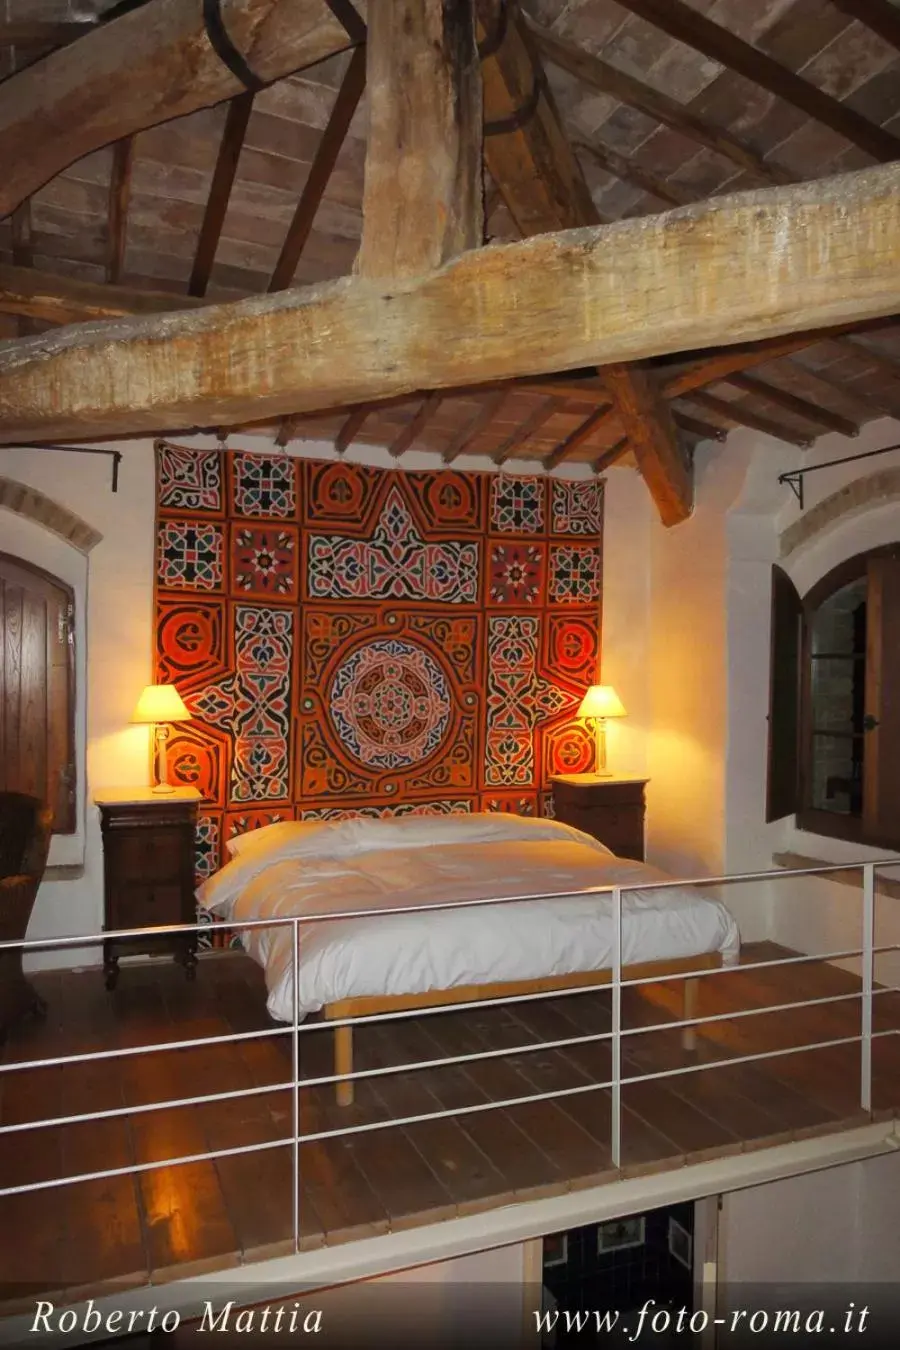 Double Room - Split Level in Castello Delle Quattro Torra